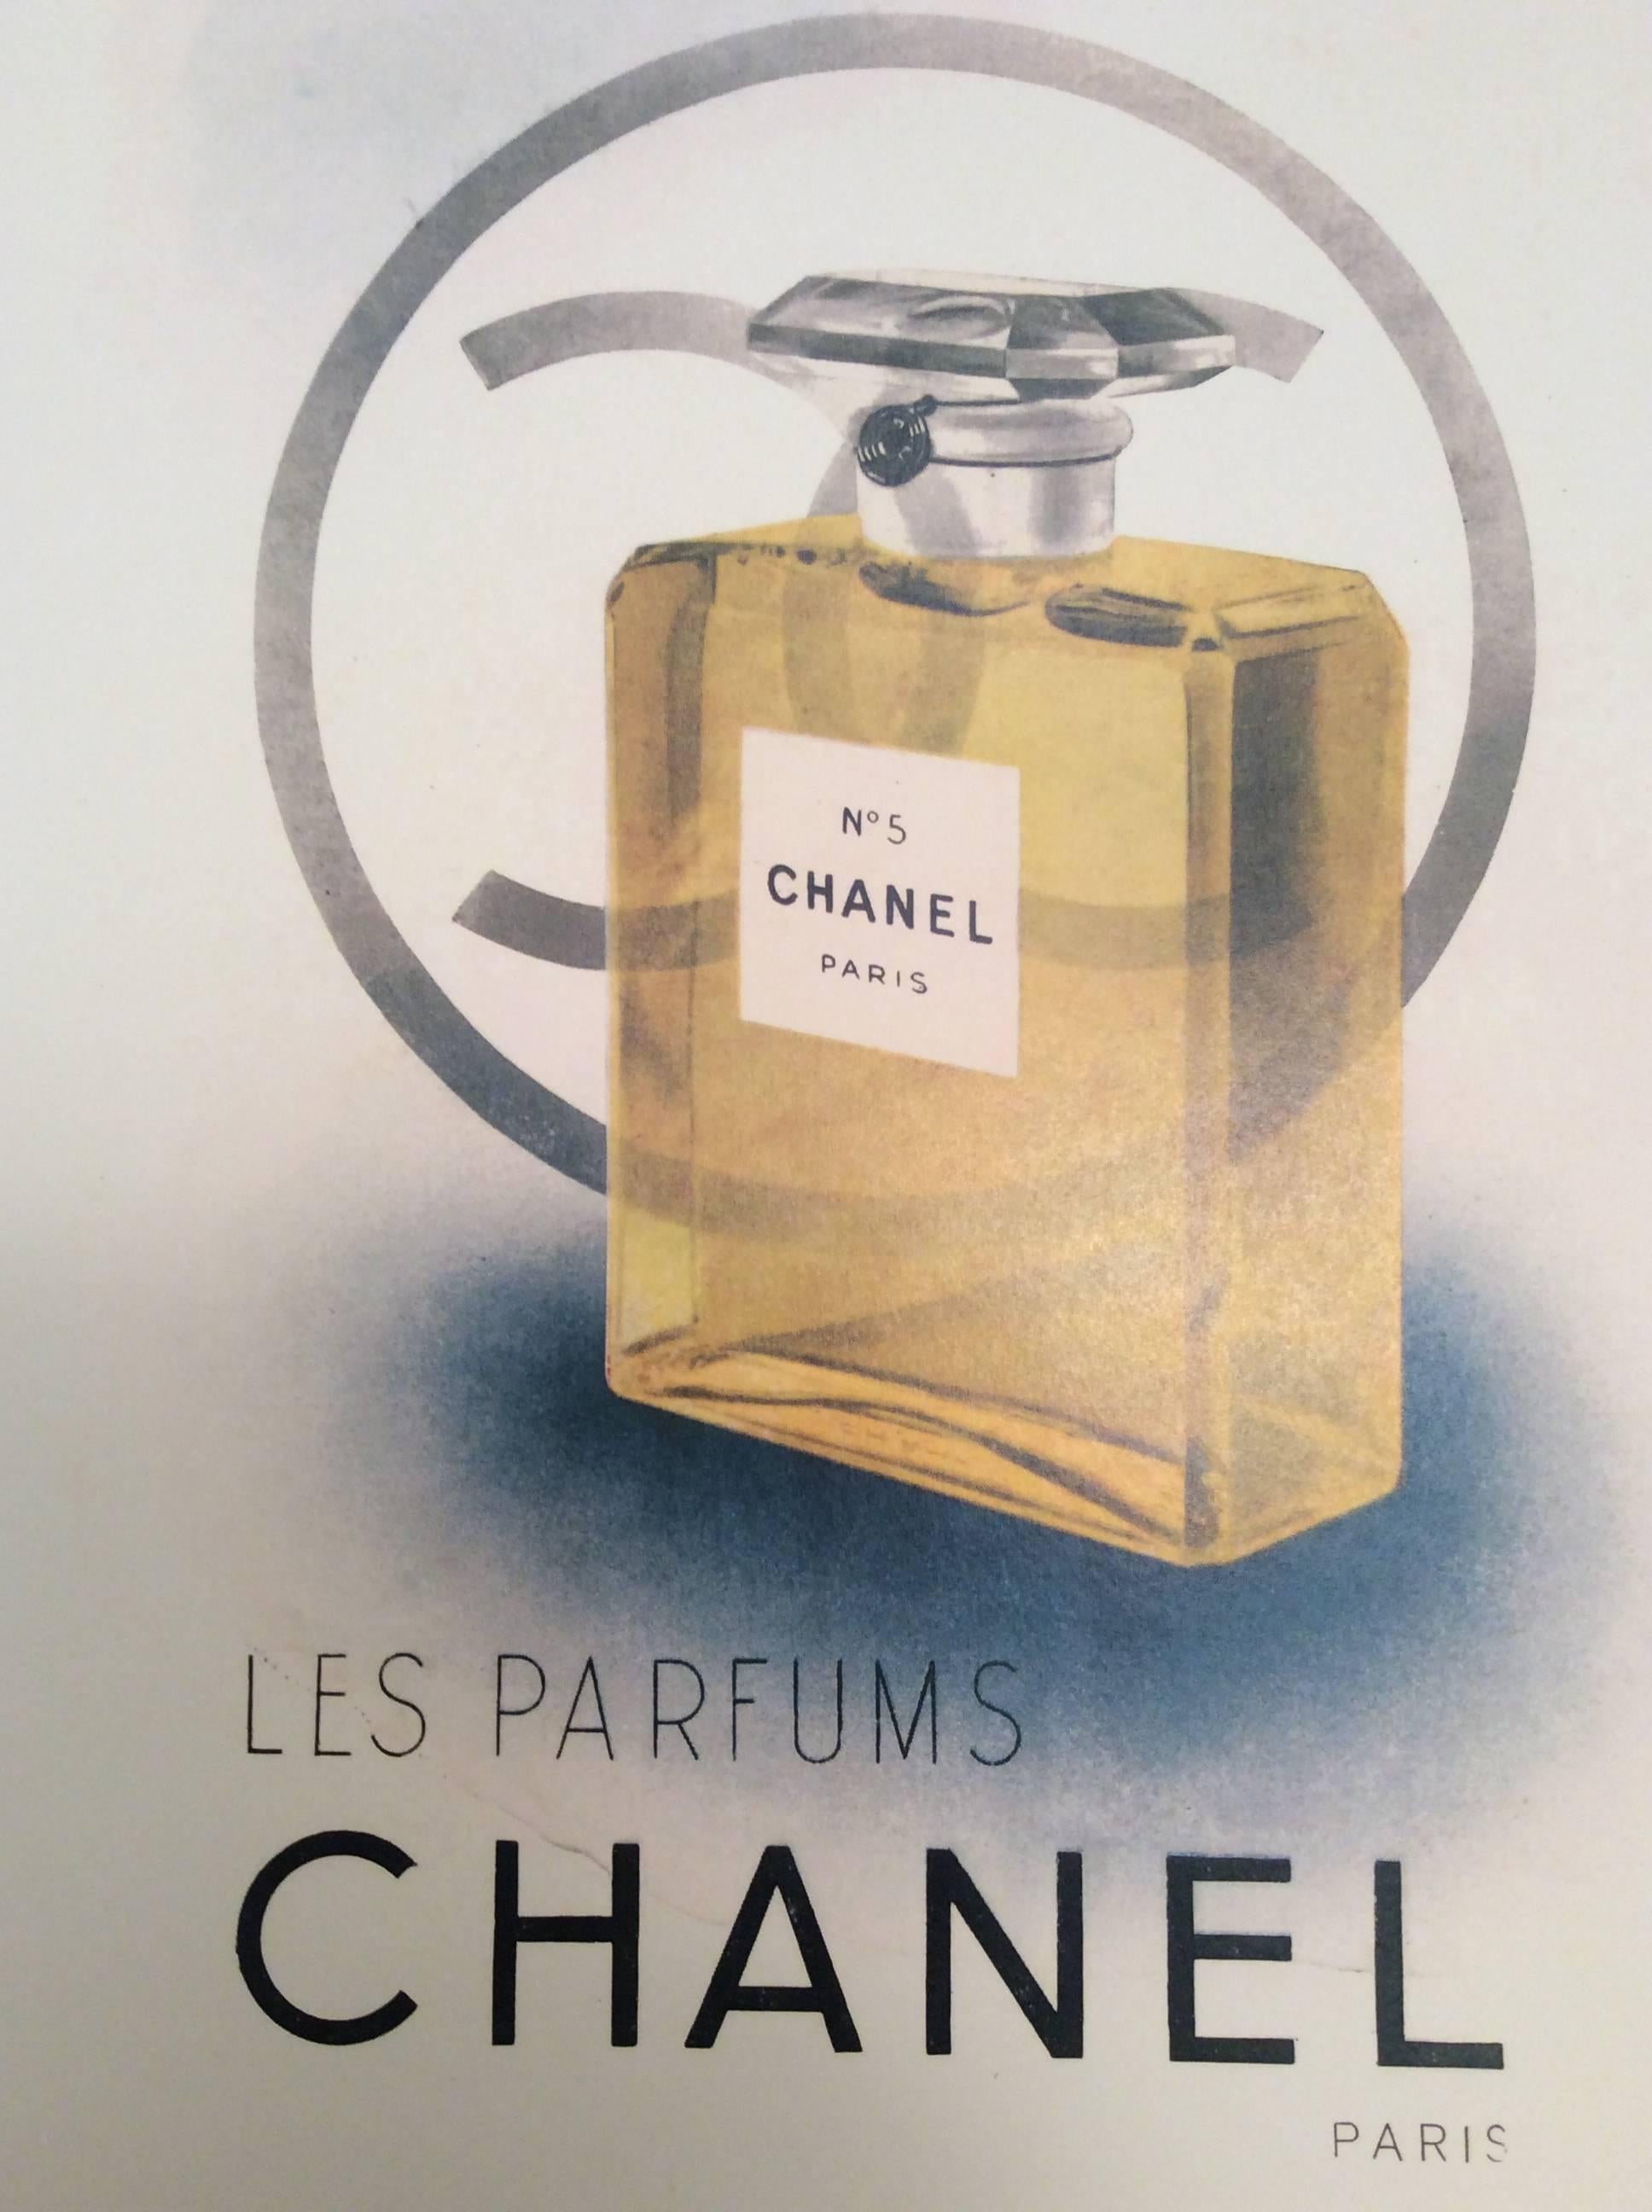 1957 chanel perfume